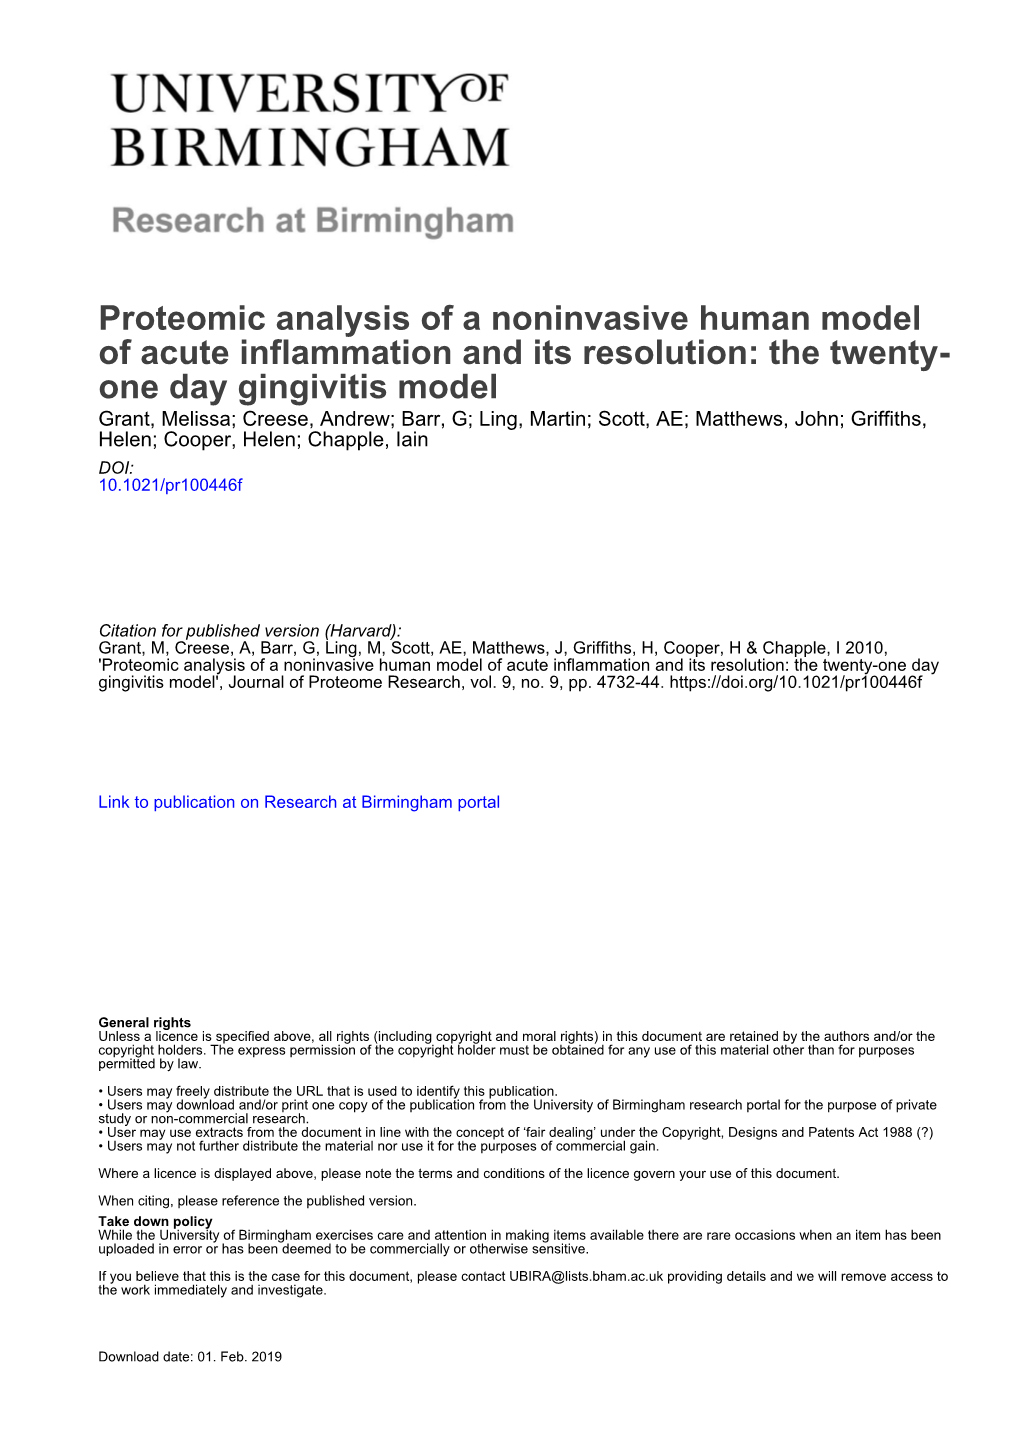 Proteomic Analysis of a Noninvasive Human Model of Acute